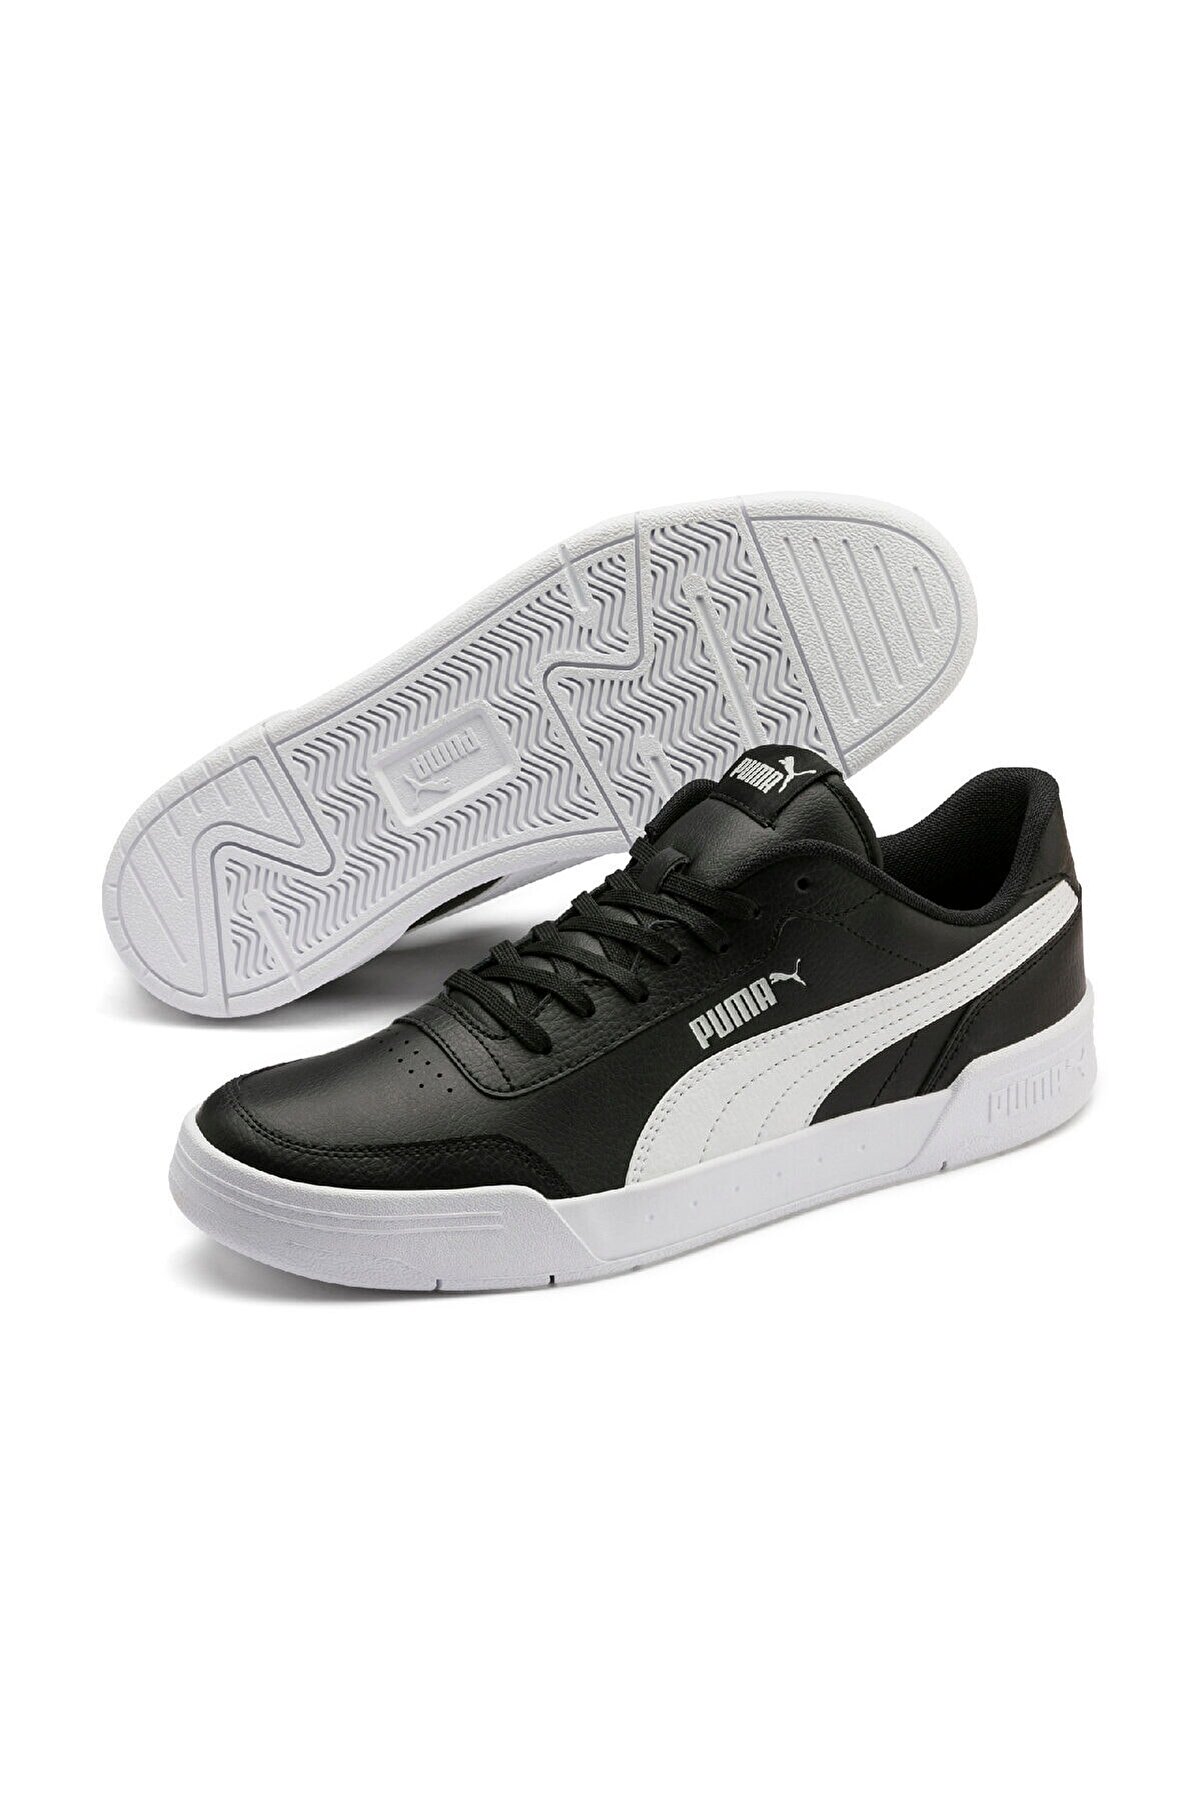 Puma CARACAL Siyah Erkek Sneaker Ayakkabı 100547134